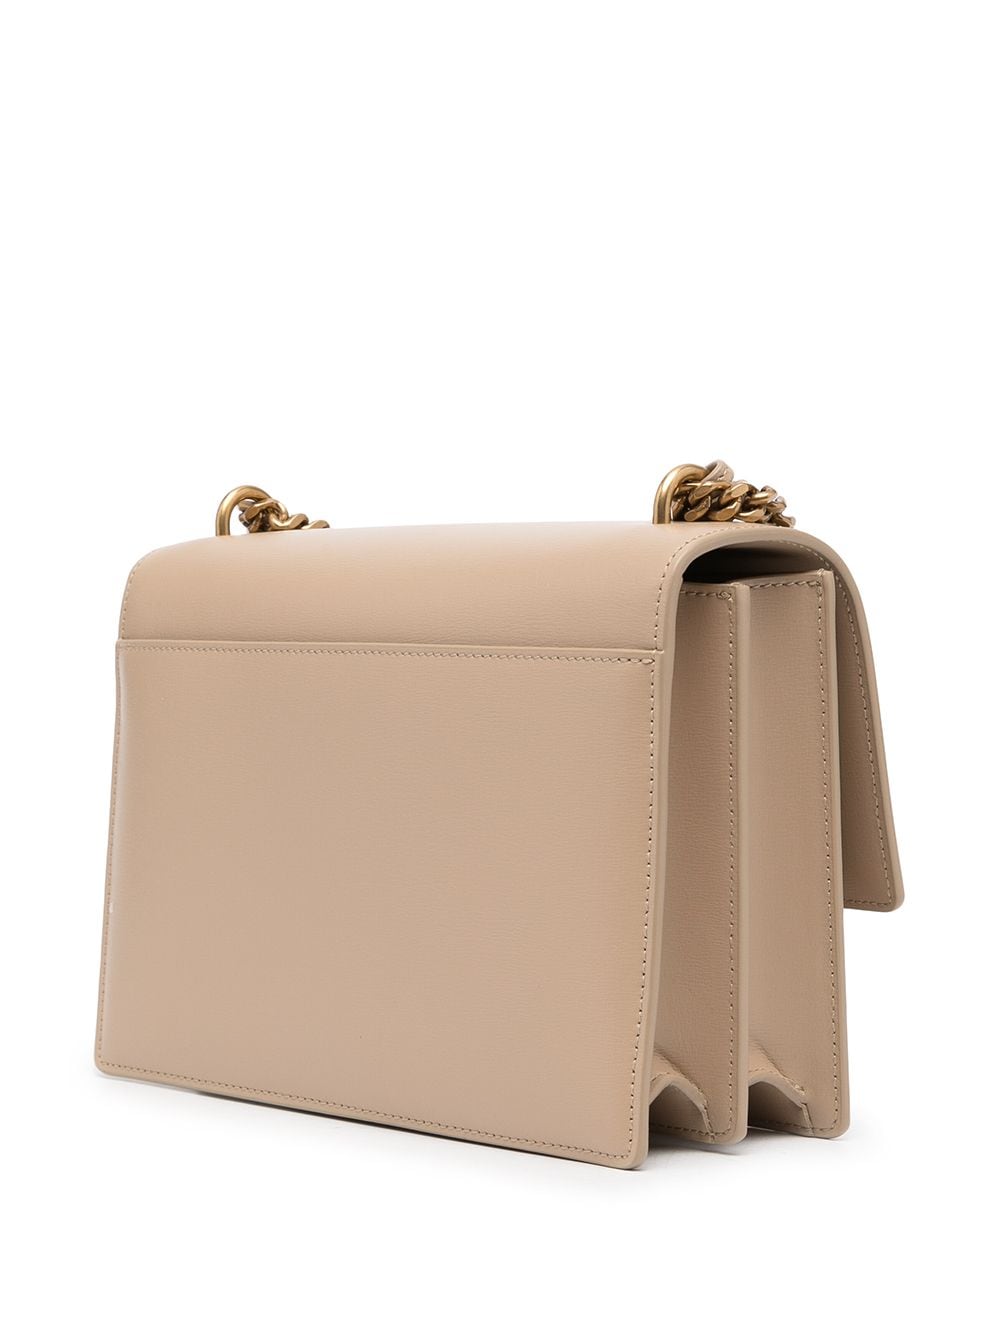 Saint Laurent Sunset Medium Leather Shoulder Bag - Cream - ShopStyle